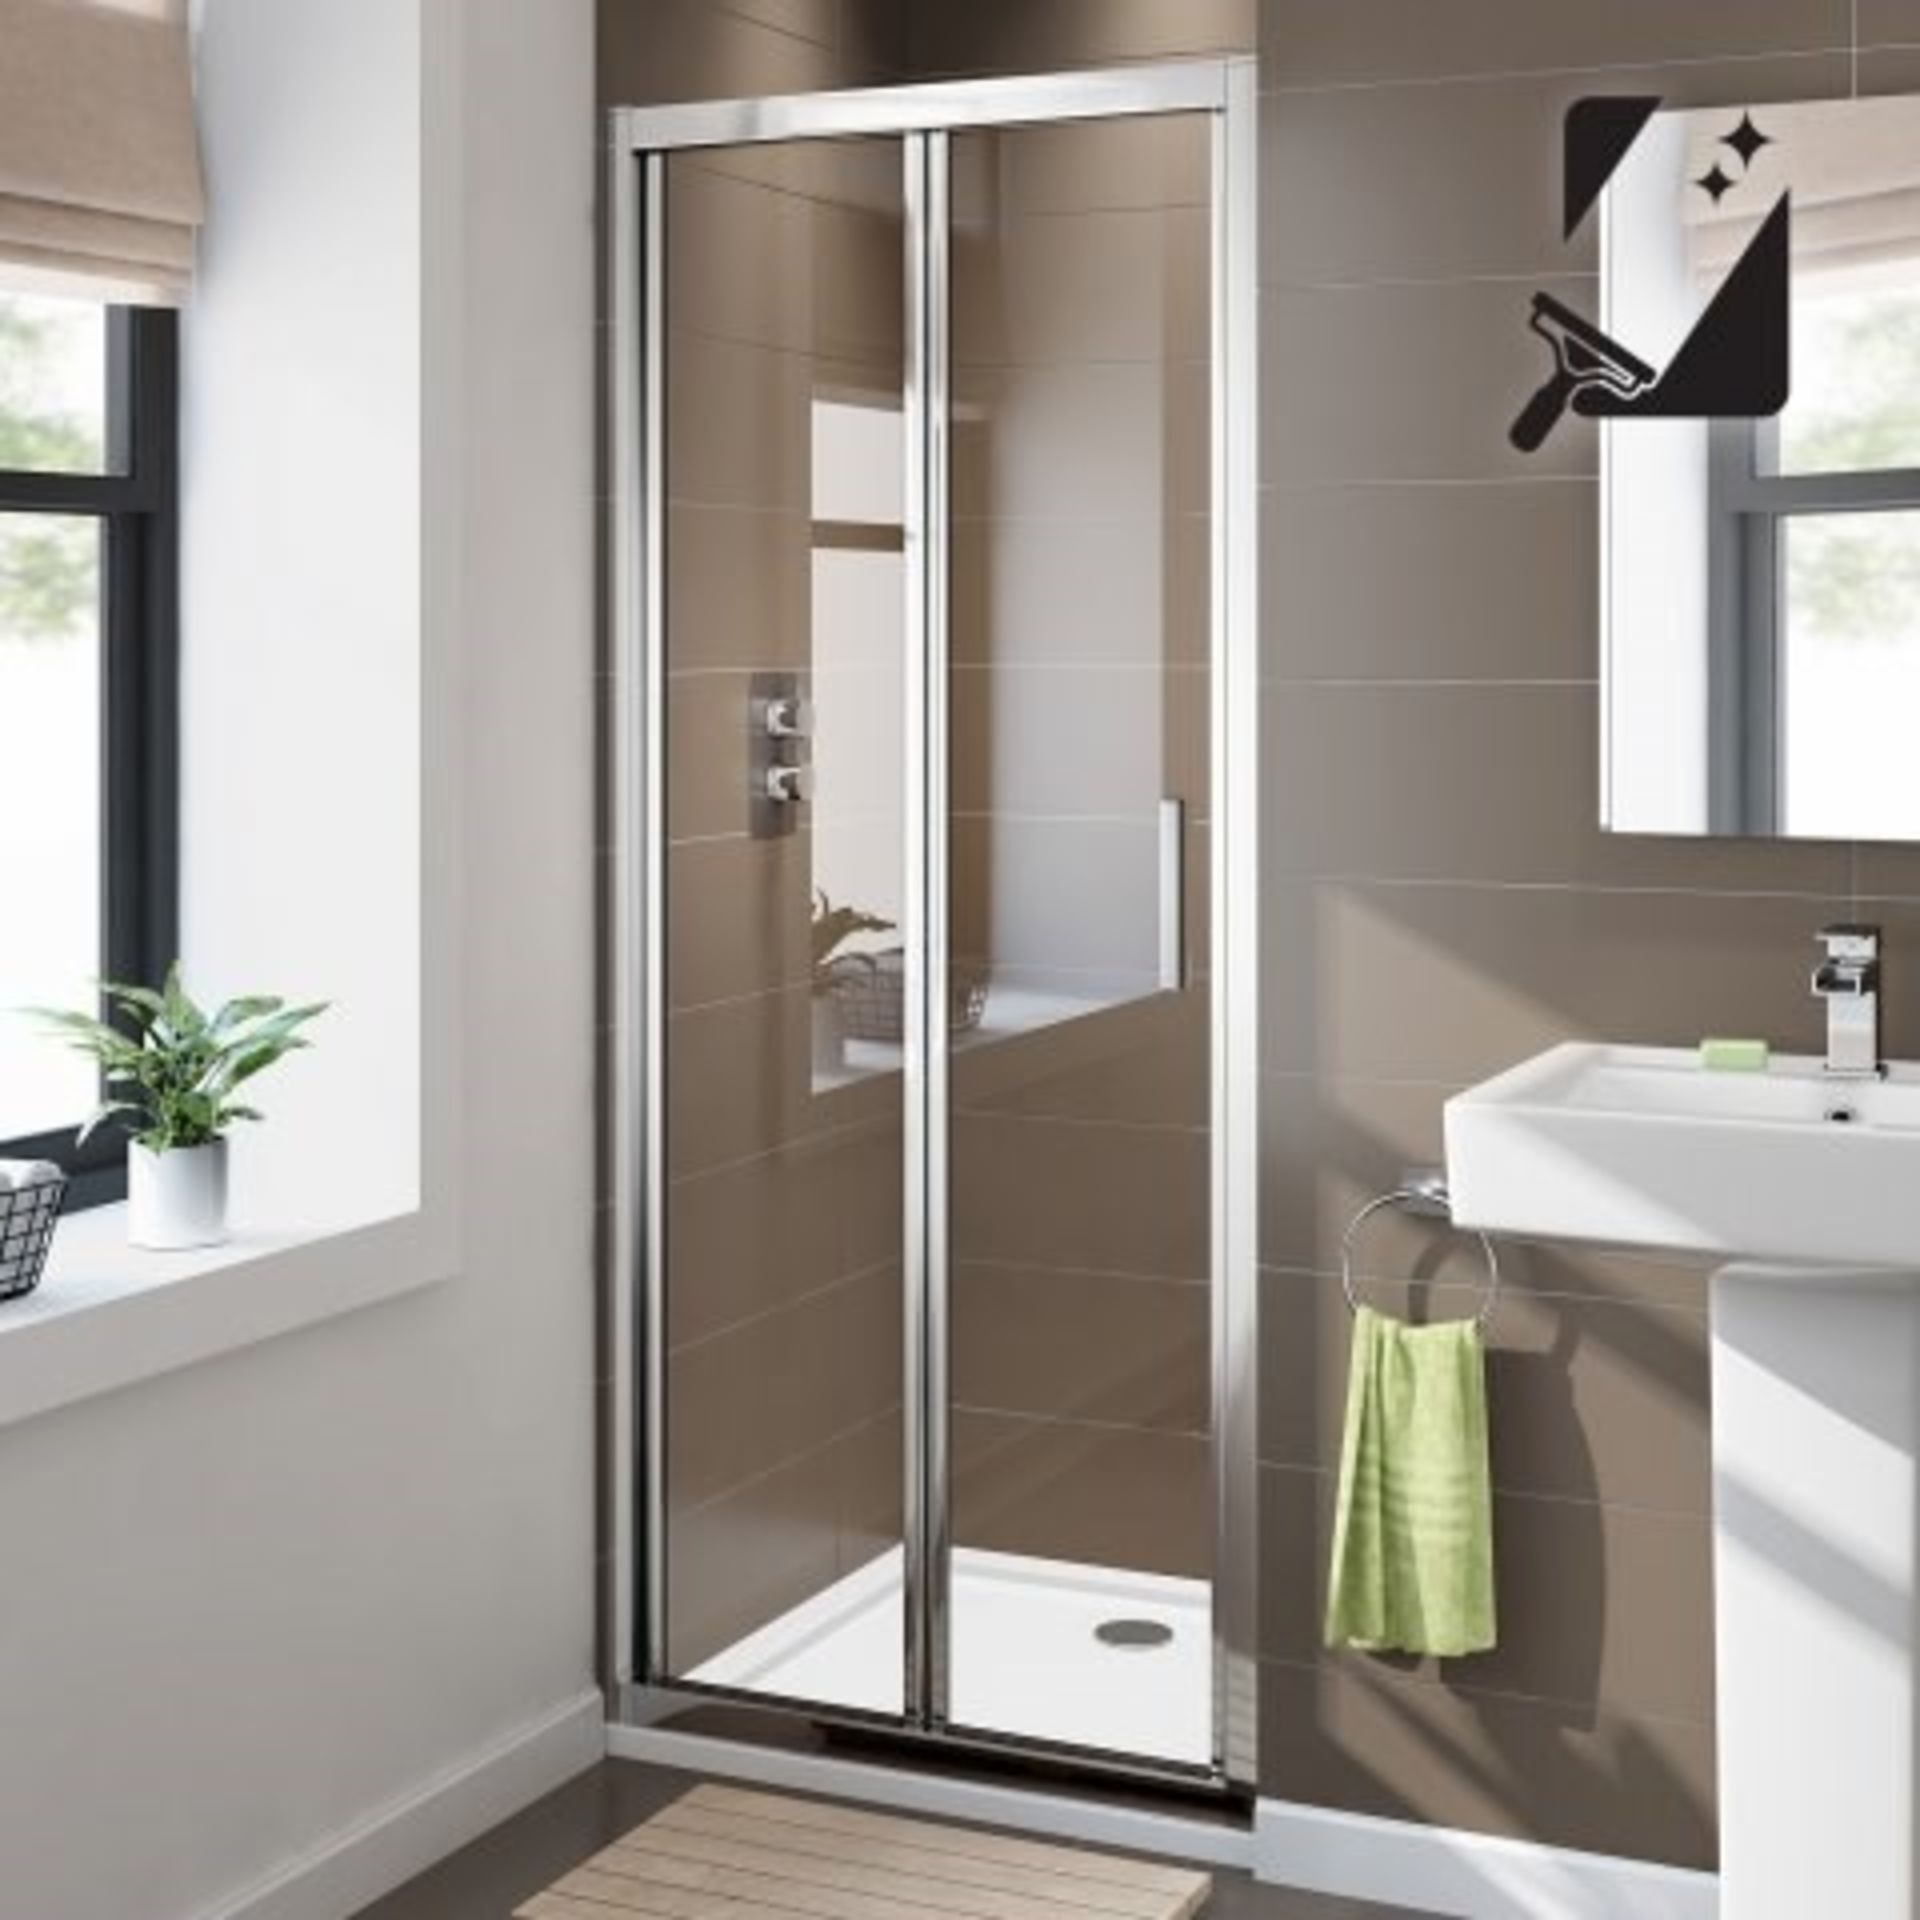 NEW Twyfords 700mm - 8mm - Premium EasyClean Bifold Shower Door. RRP £379.99.Durability to wi...